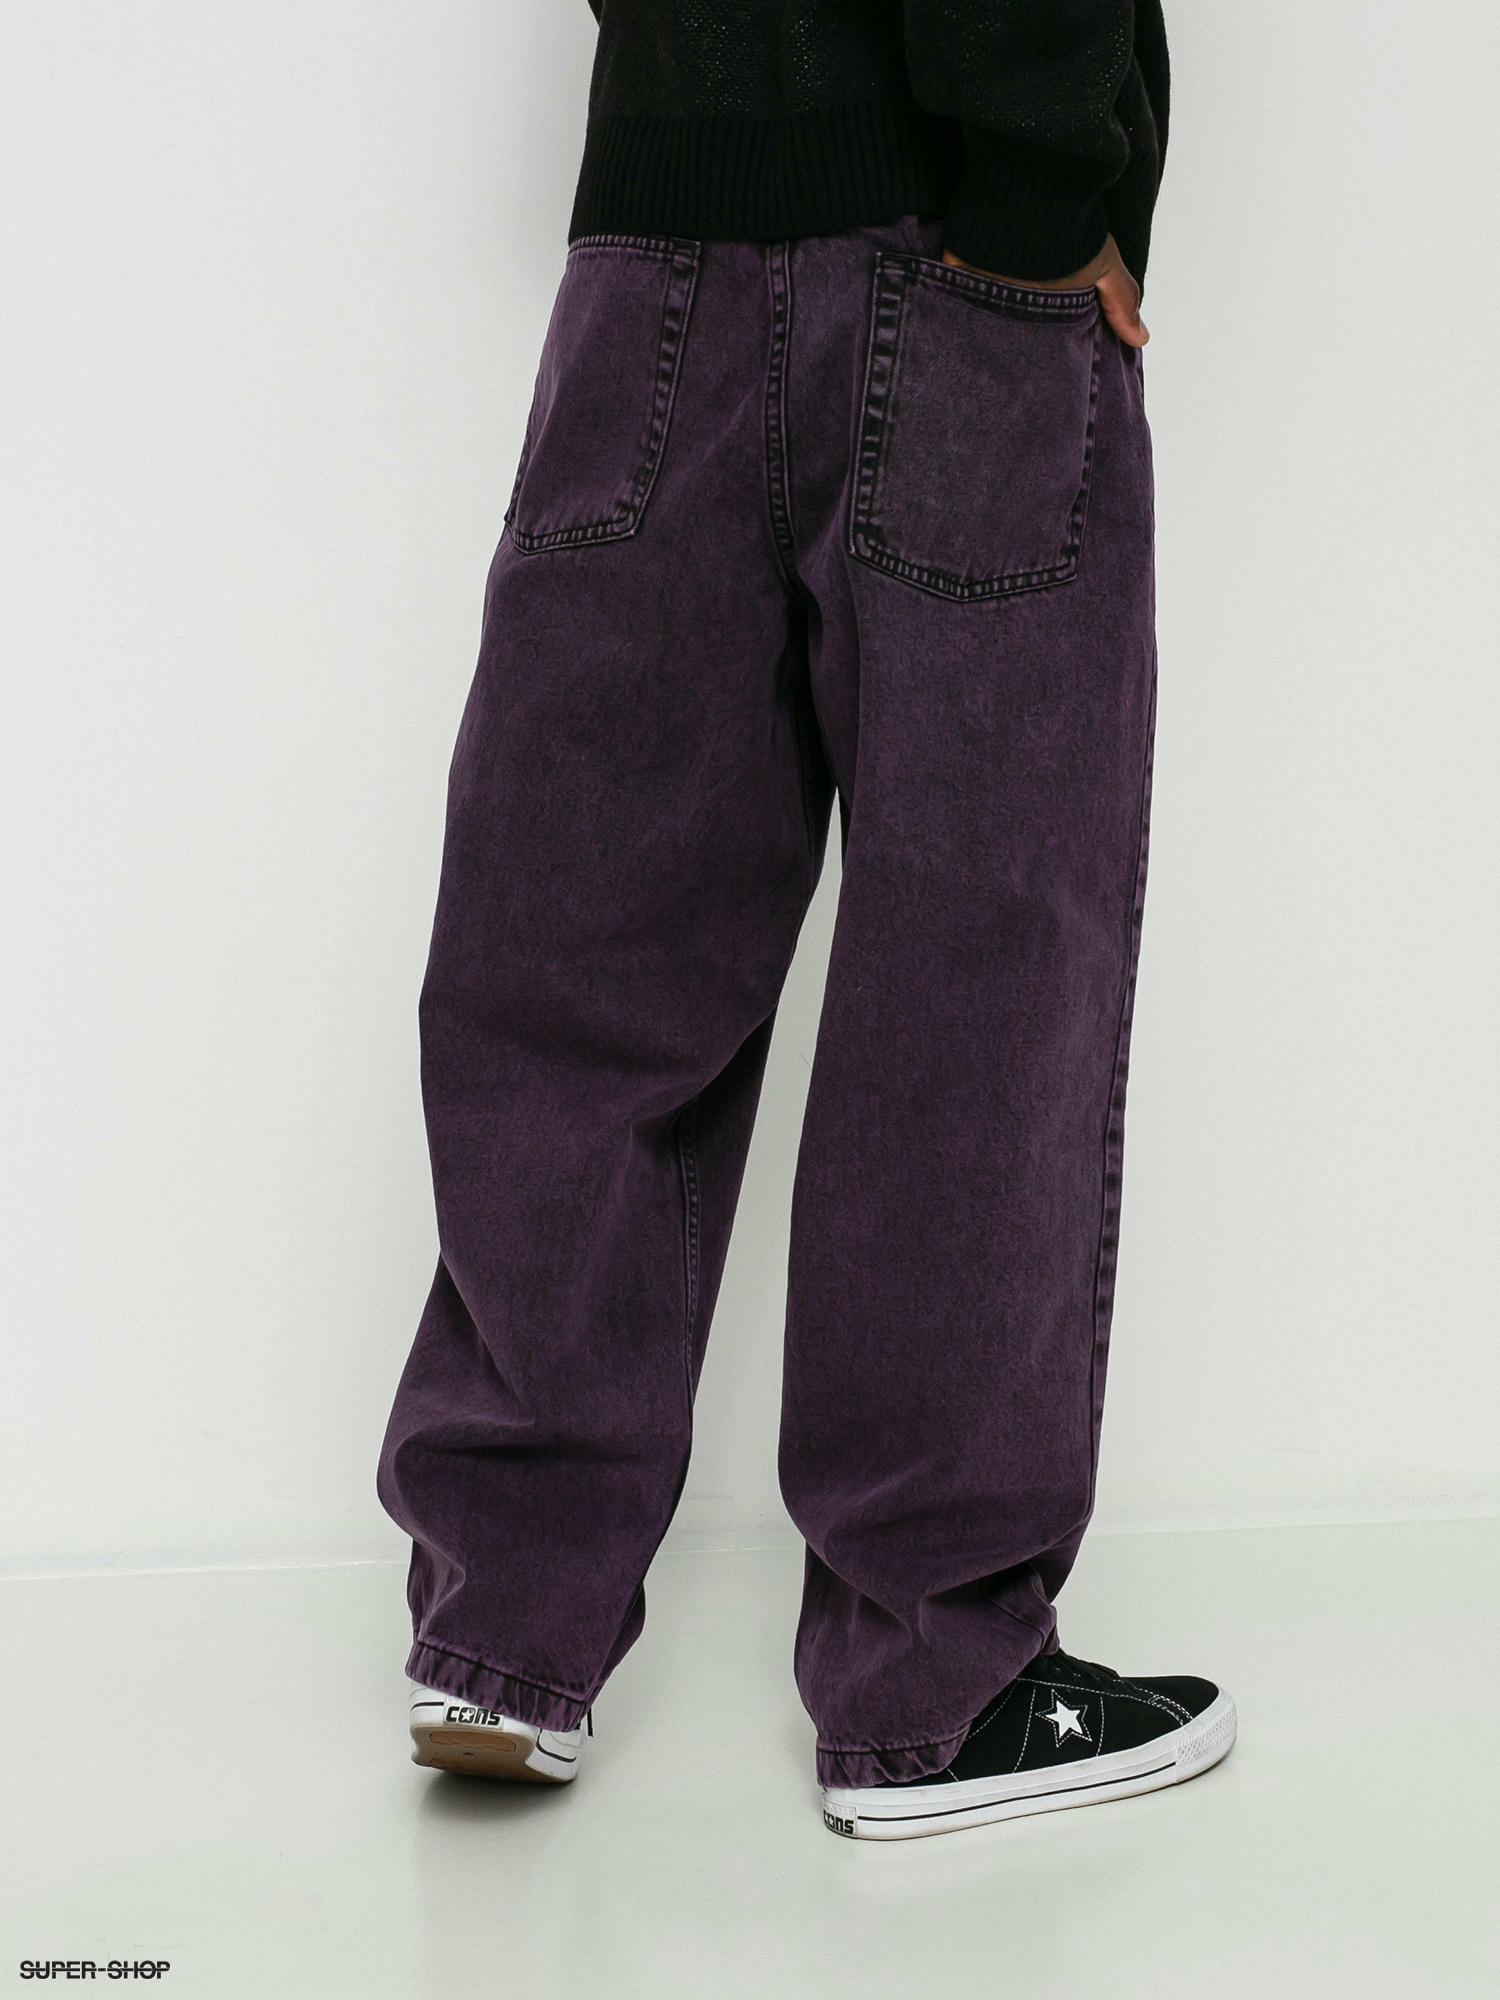 Polar Skate Big Boy Jeans Hose (purple black)